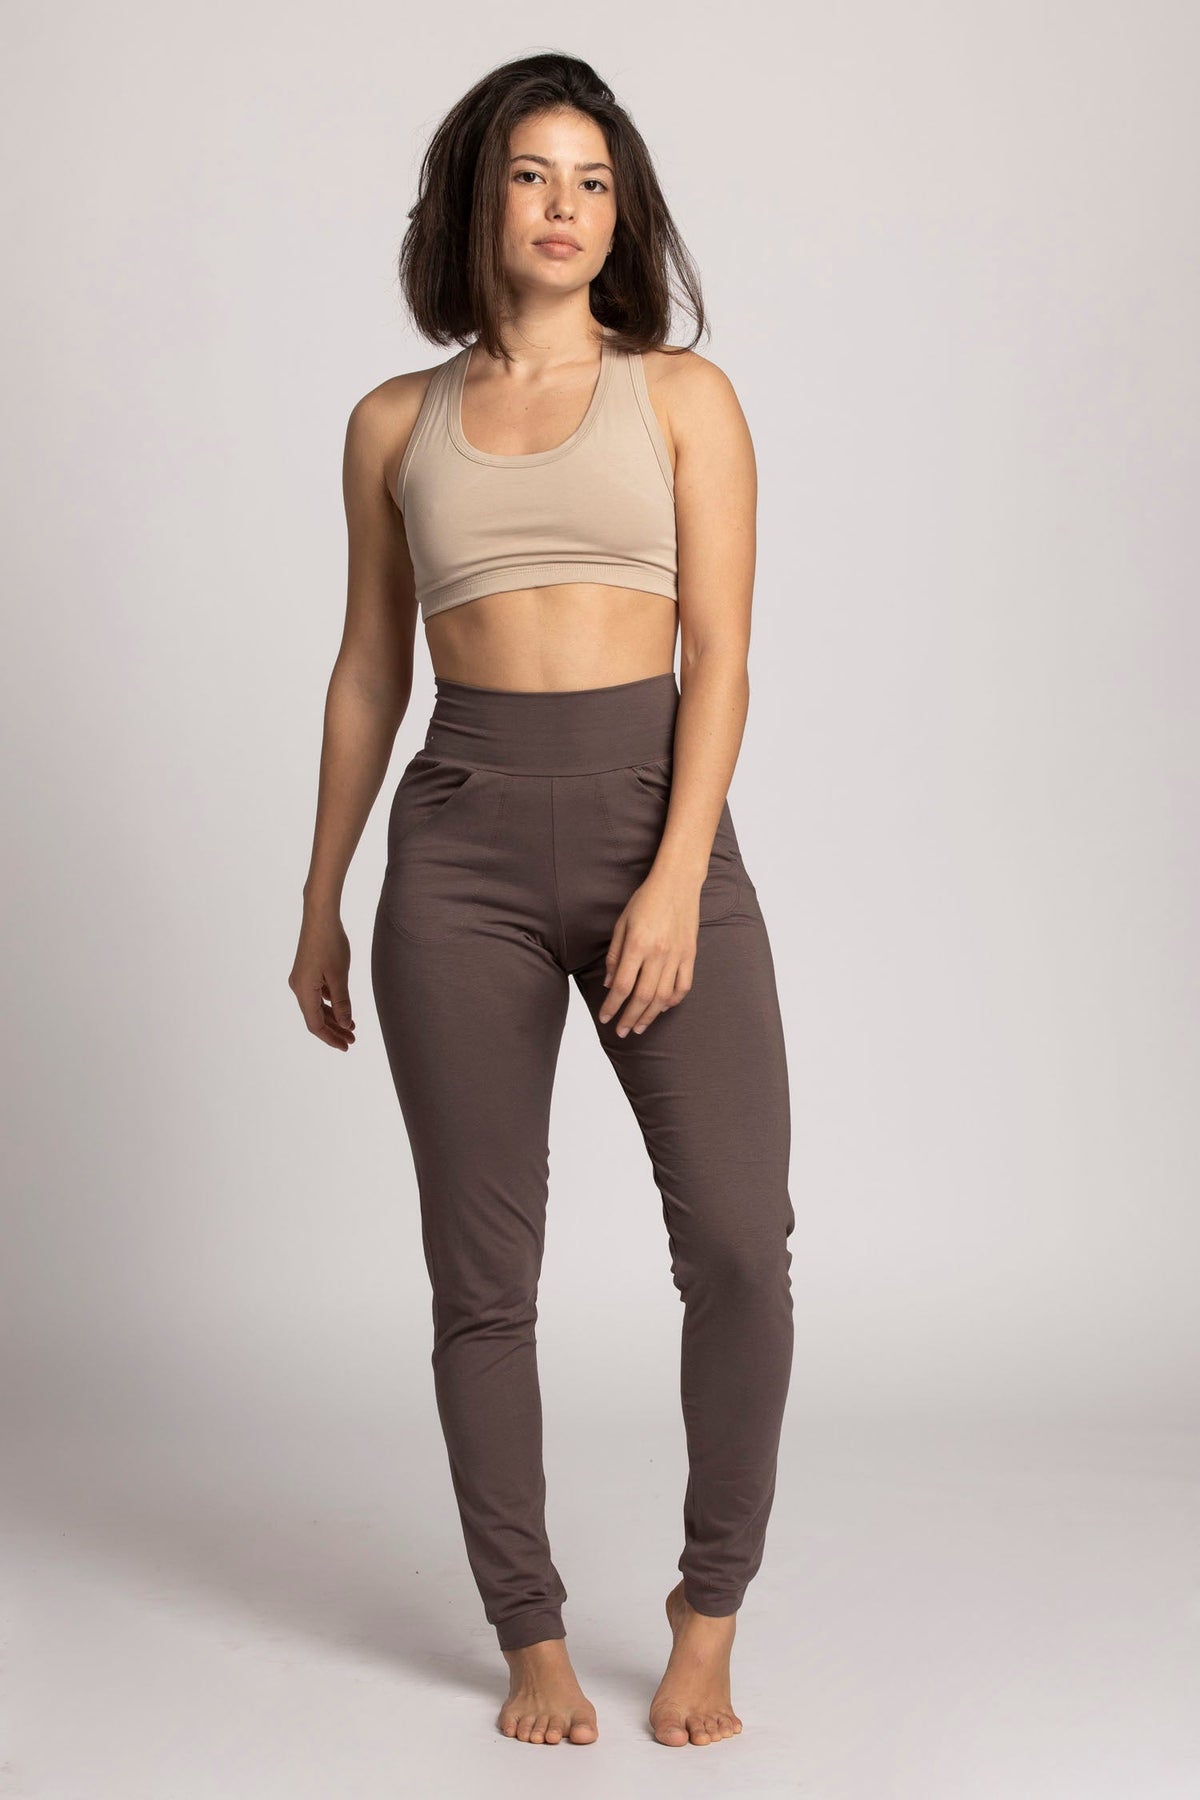 Pecan Slouchy Unisex Yoga Pants womens clothing Ripple Yoga Wear 